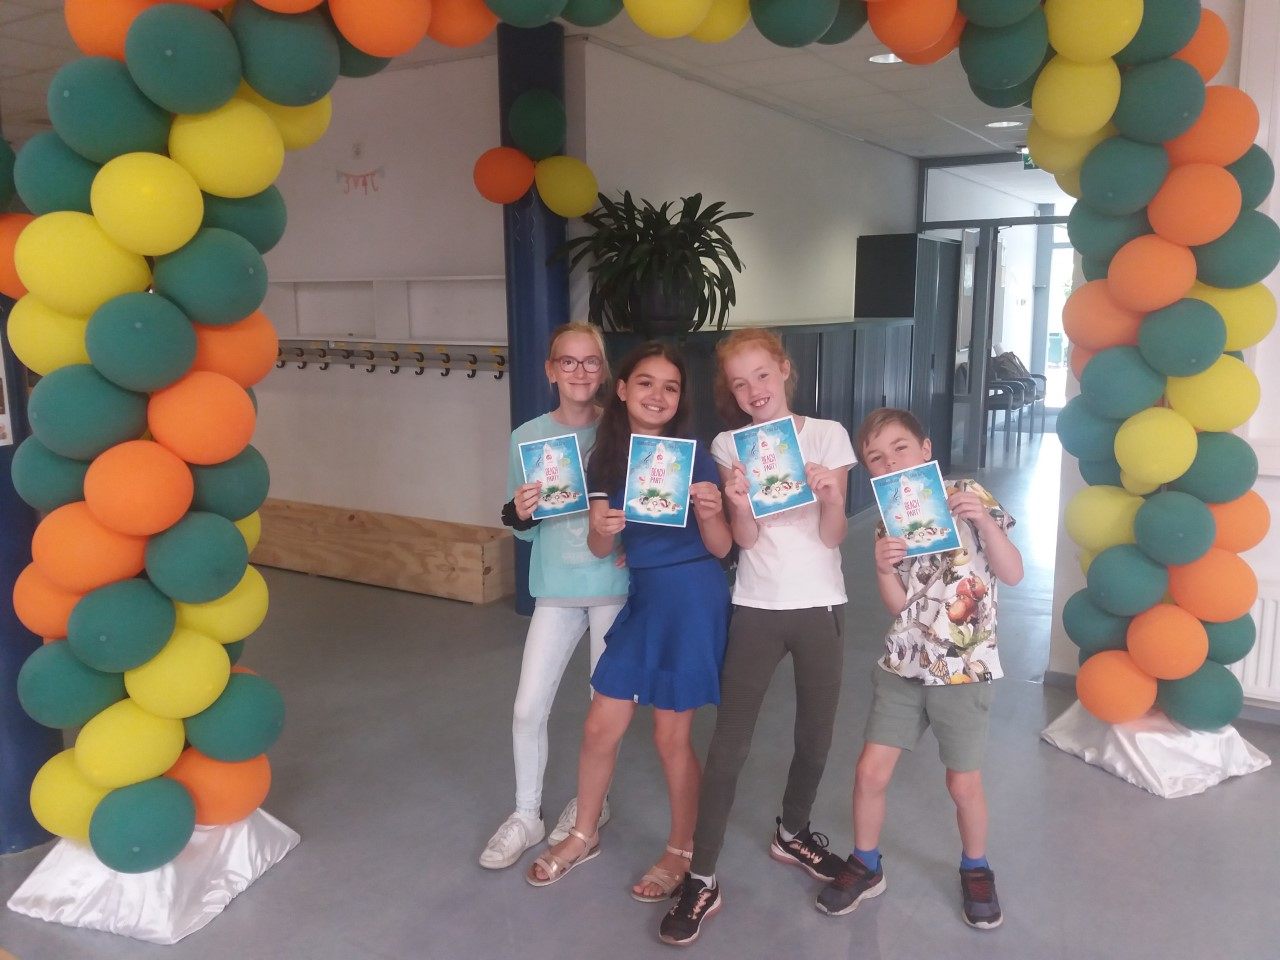 Spiksplinternieuw Kinderen organiseren eigen kinderdisco in Udenhout - Omroep Tilburg AX-36